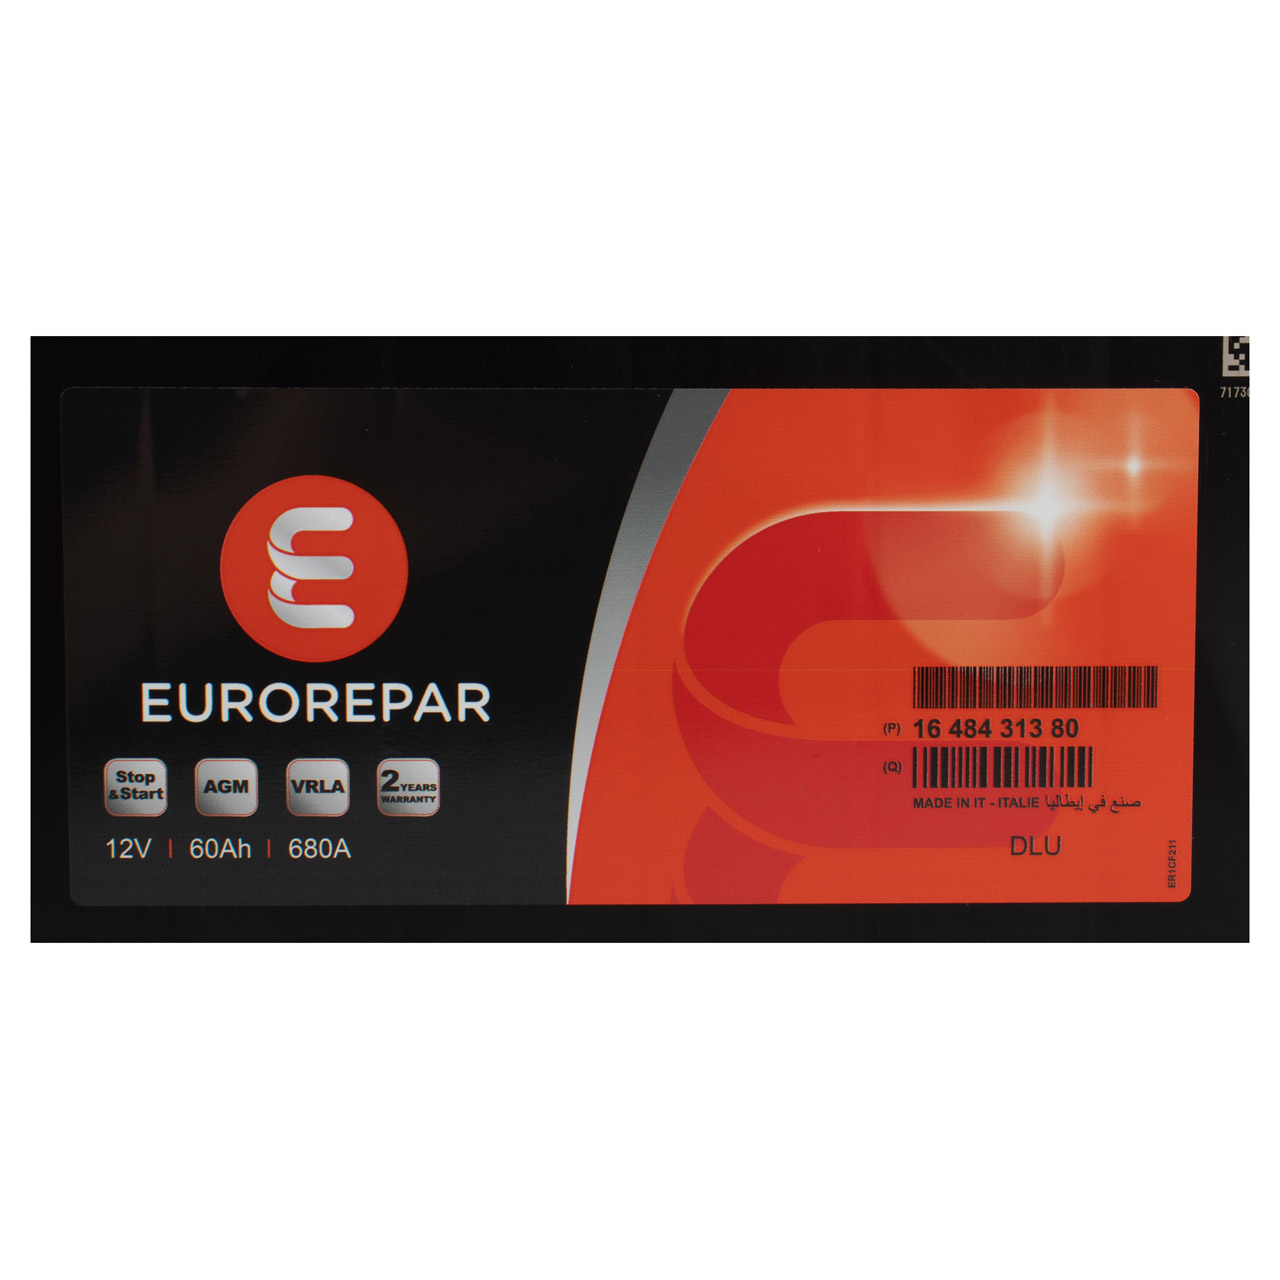 EUROREPAR AGM Batterie Autobatterie Starterbatterie 12V 60Ah 680A/EN 1692582380